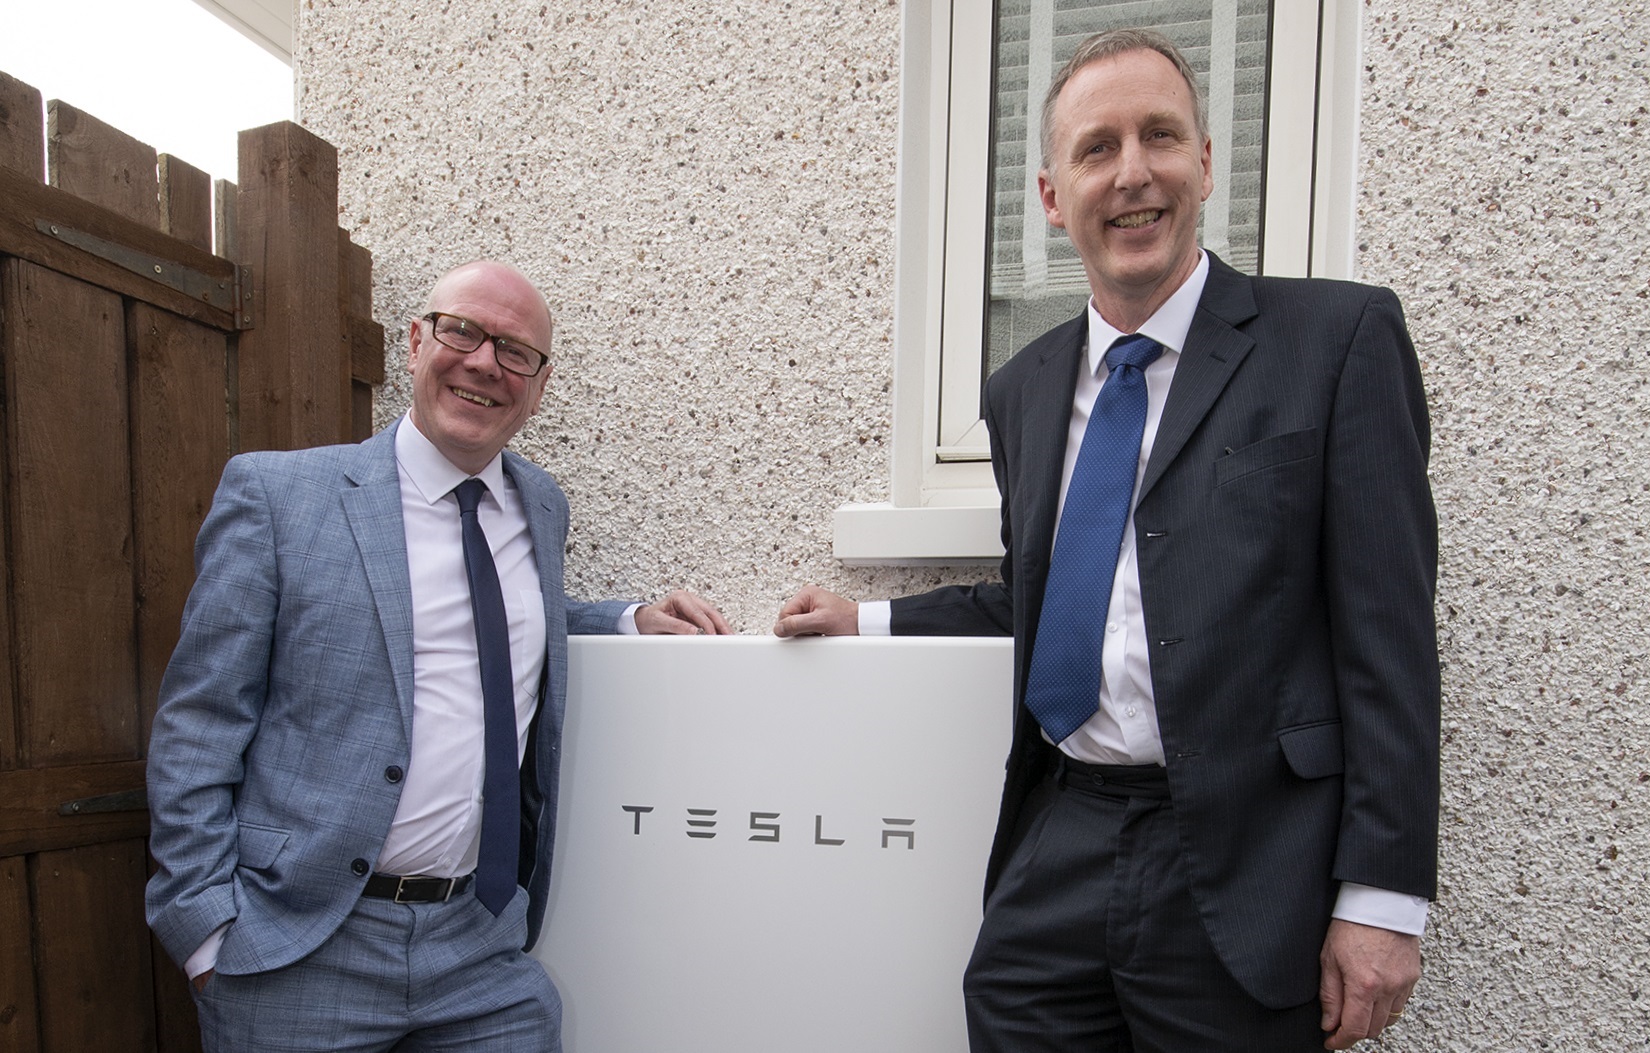 And finally... Tesla batteries to help reduce electricity bills at Aberdeen social housing development